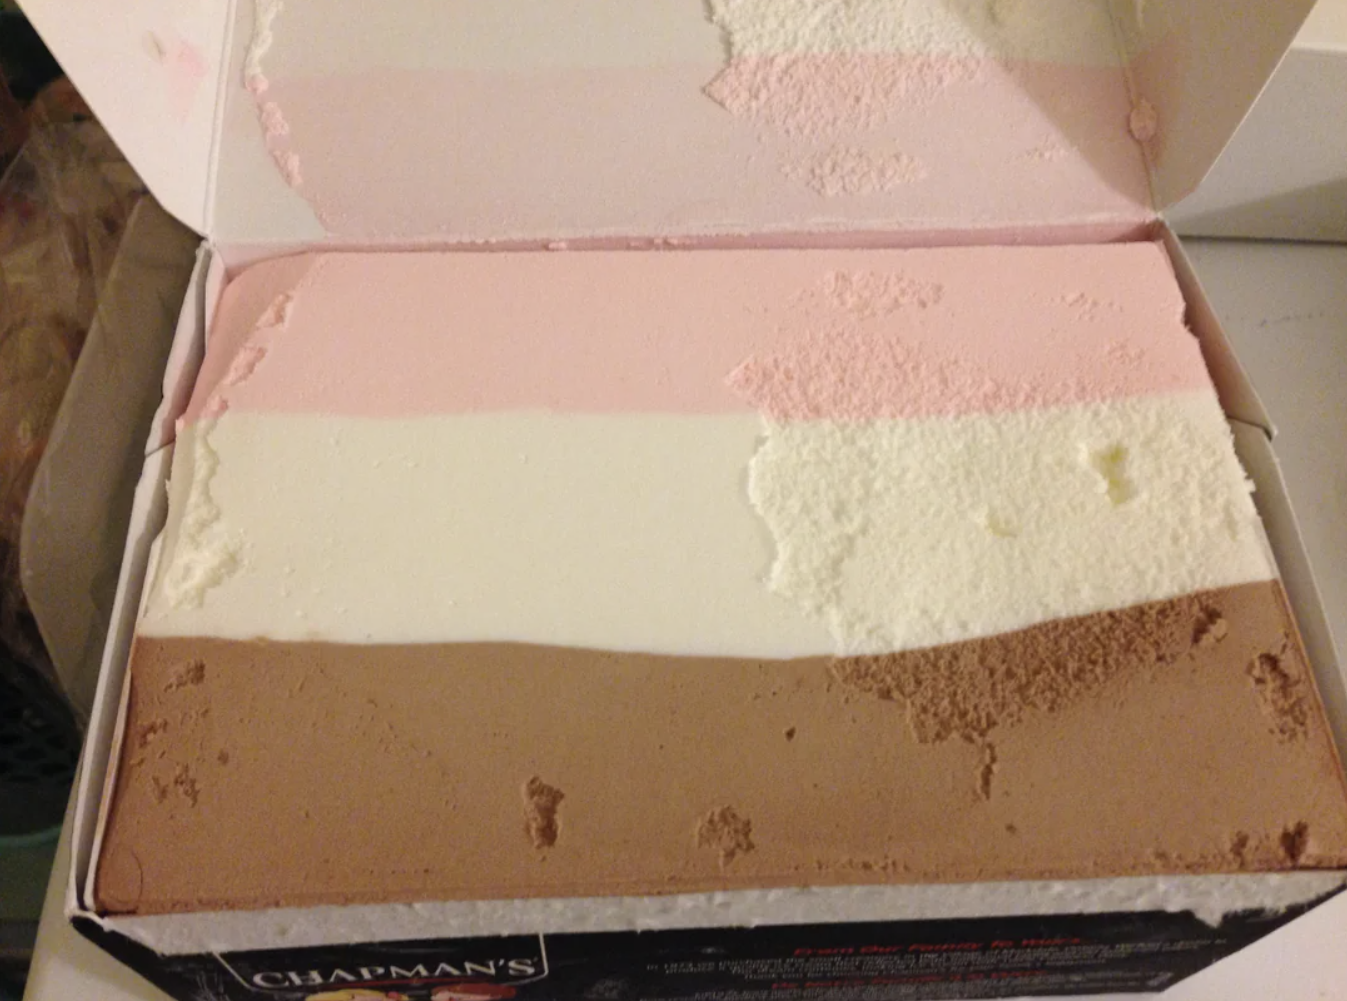 Retro square &quot;Neapolitan&quot; ice cream box with three flavors: strawberry, vanilla, and chocolate